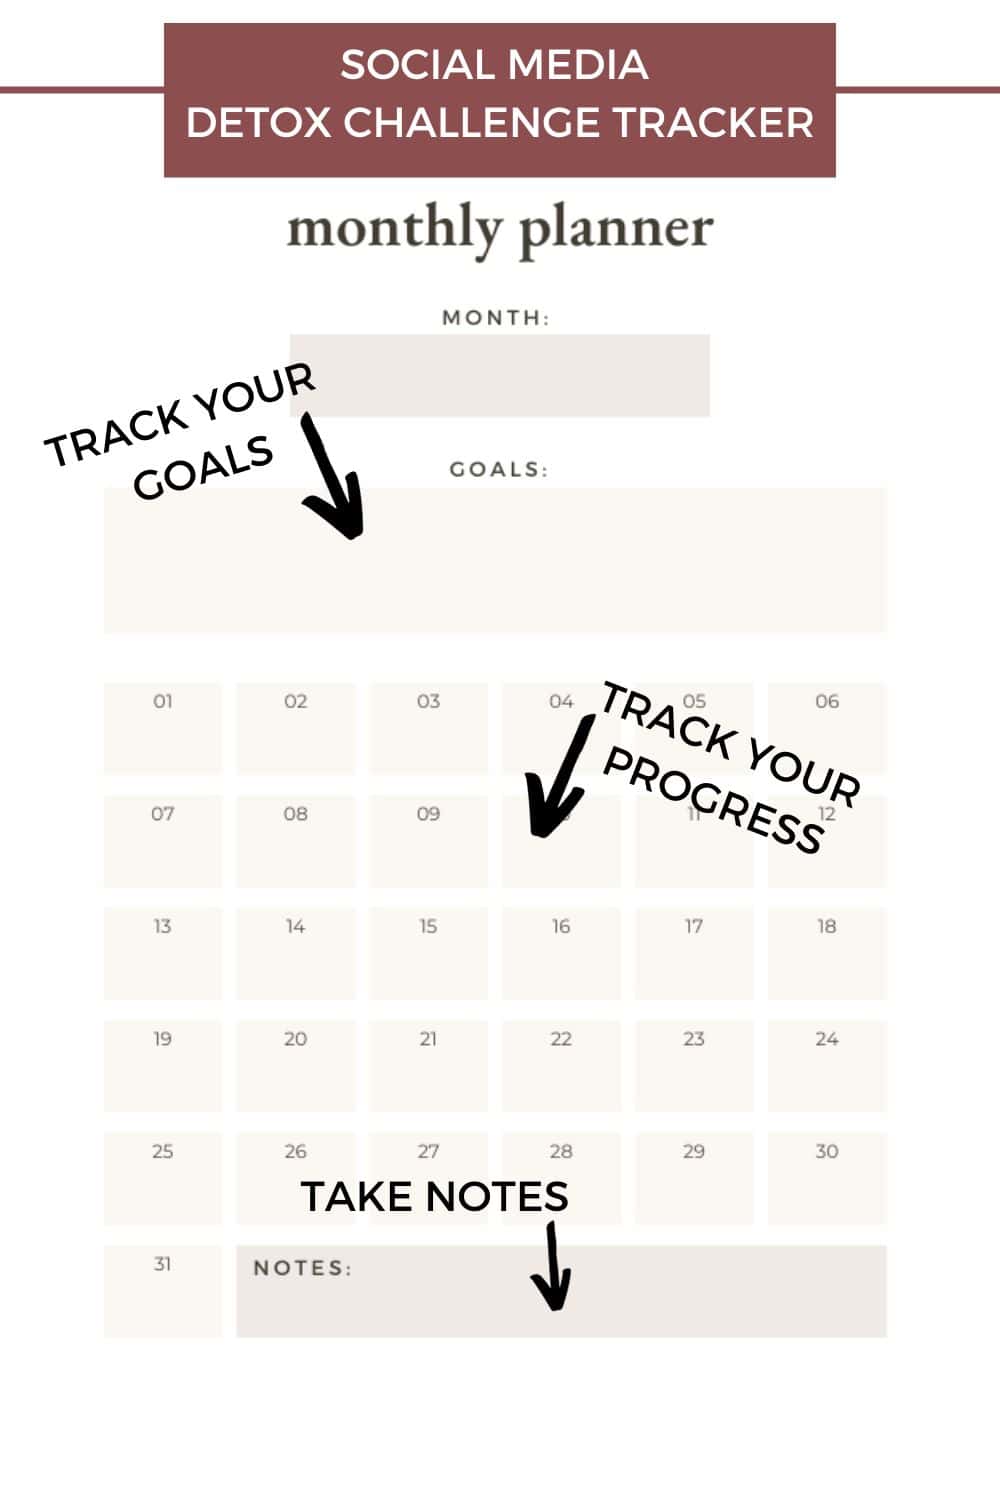 social media detox challenge tracker: track your goals, track your progress, take notes